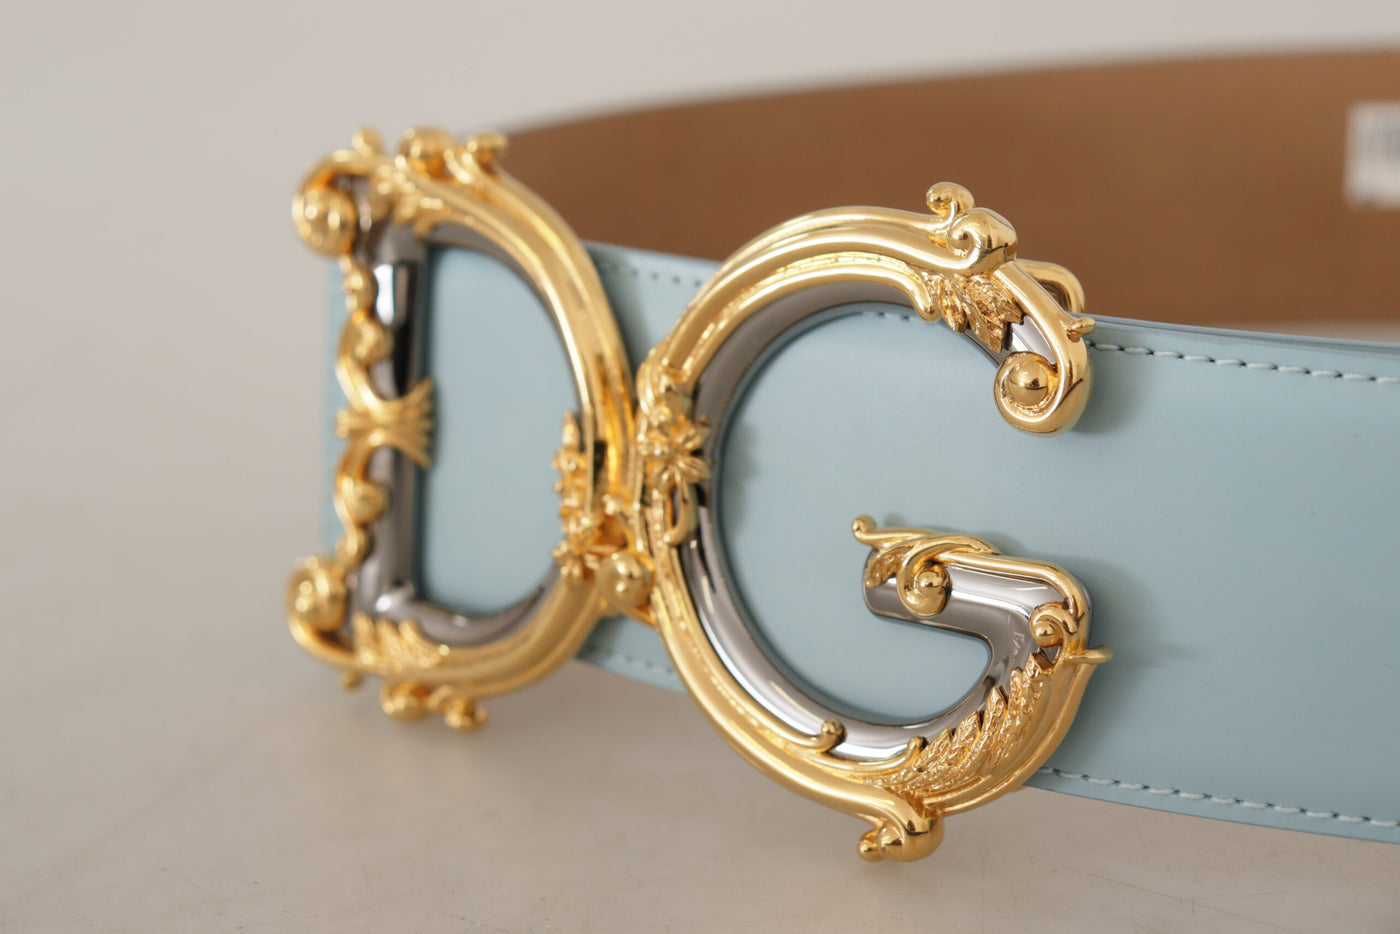 Dolce & Gabbana Blue Leather Wide Waist DG Logo Baroque Gold Buckle Belt